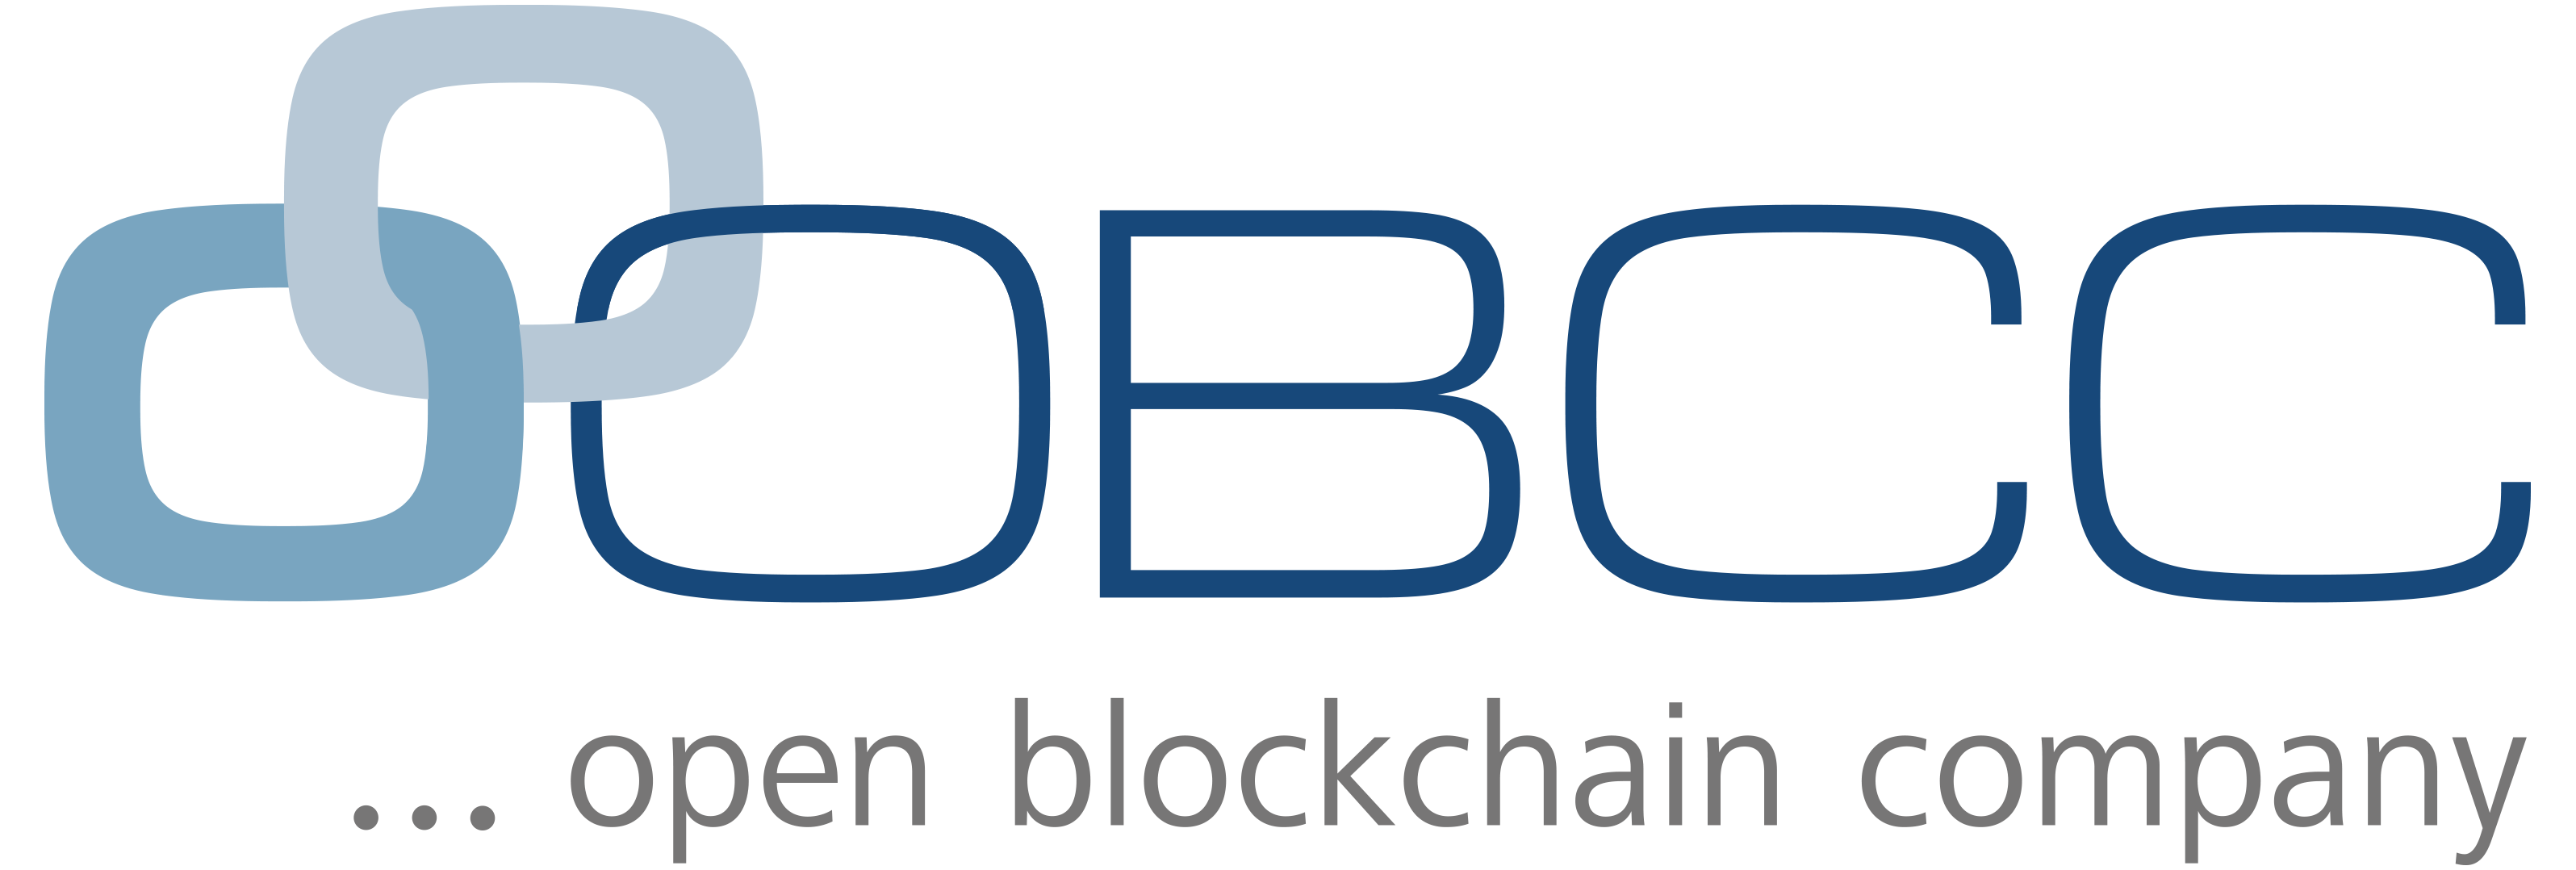 OB//CC - open blockchain company Logo